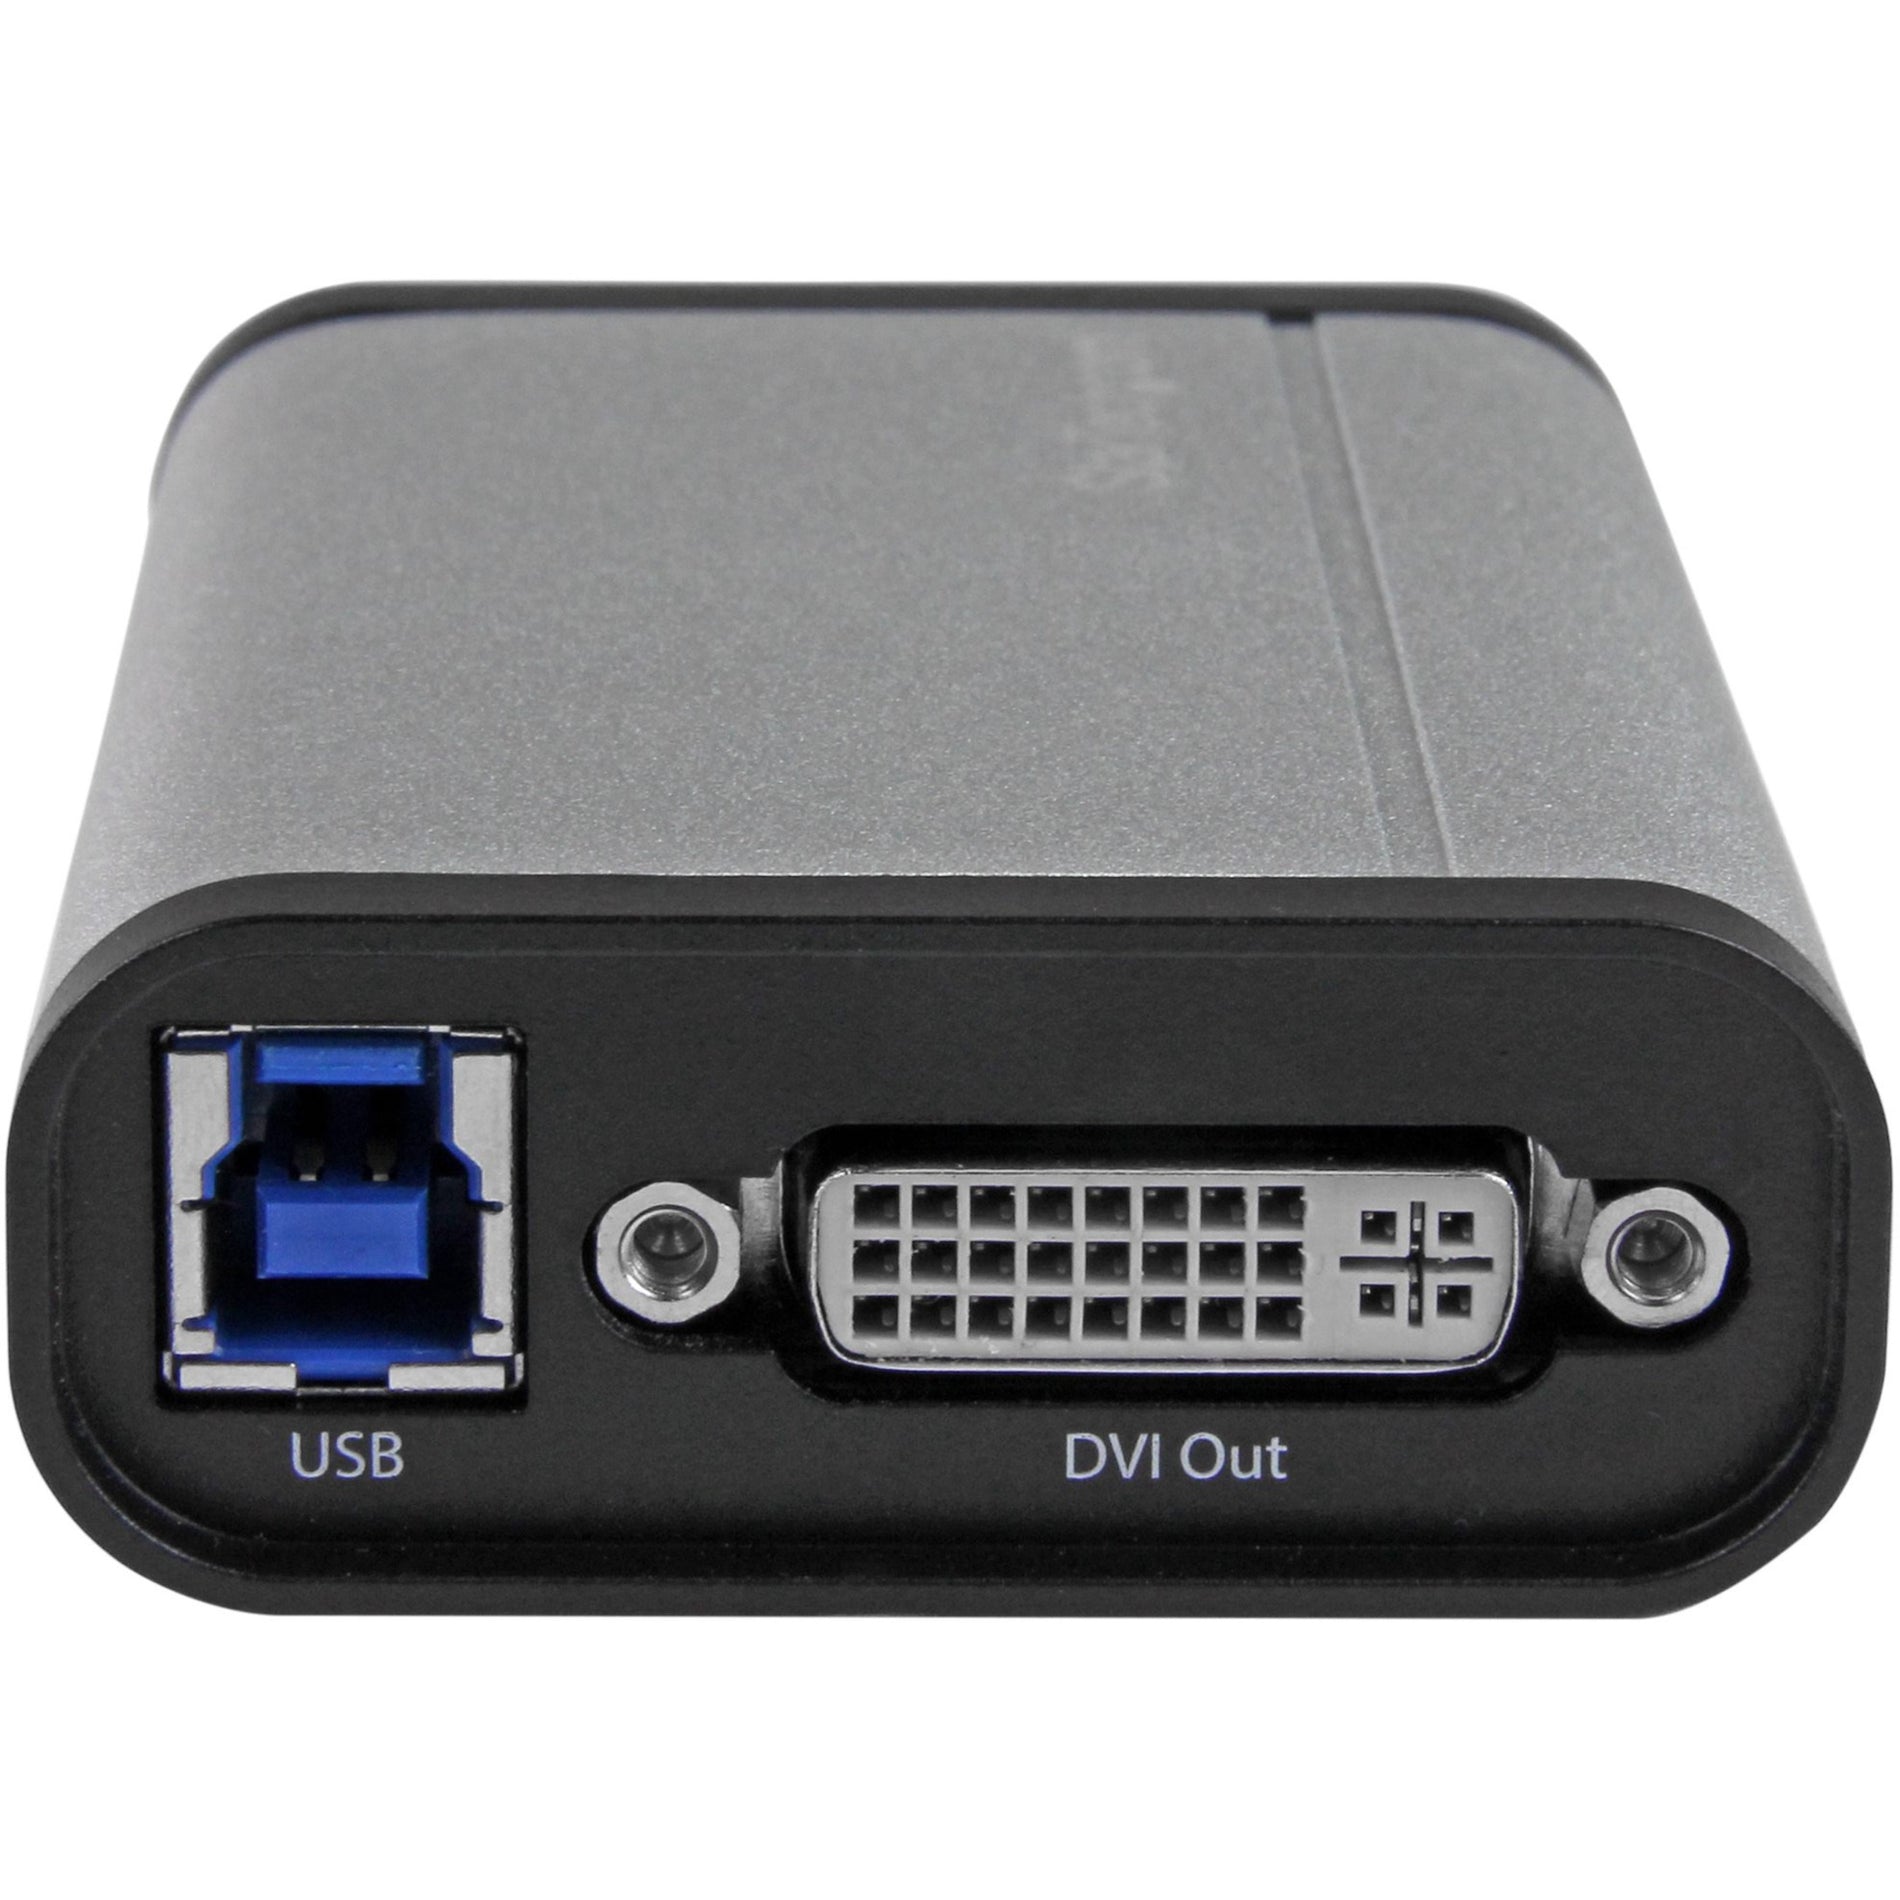 StarTech.com USB32DVCAPRO USB 3.0 Capture Device for High Performance DVI Video - 1080p 60fps - Aluminum, TAA Compliant [Discontinued]